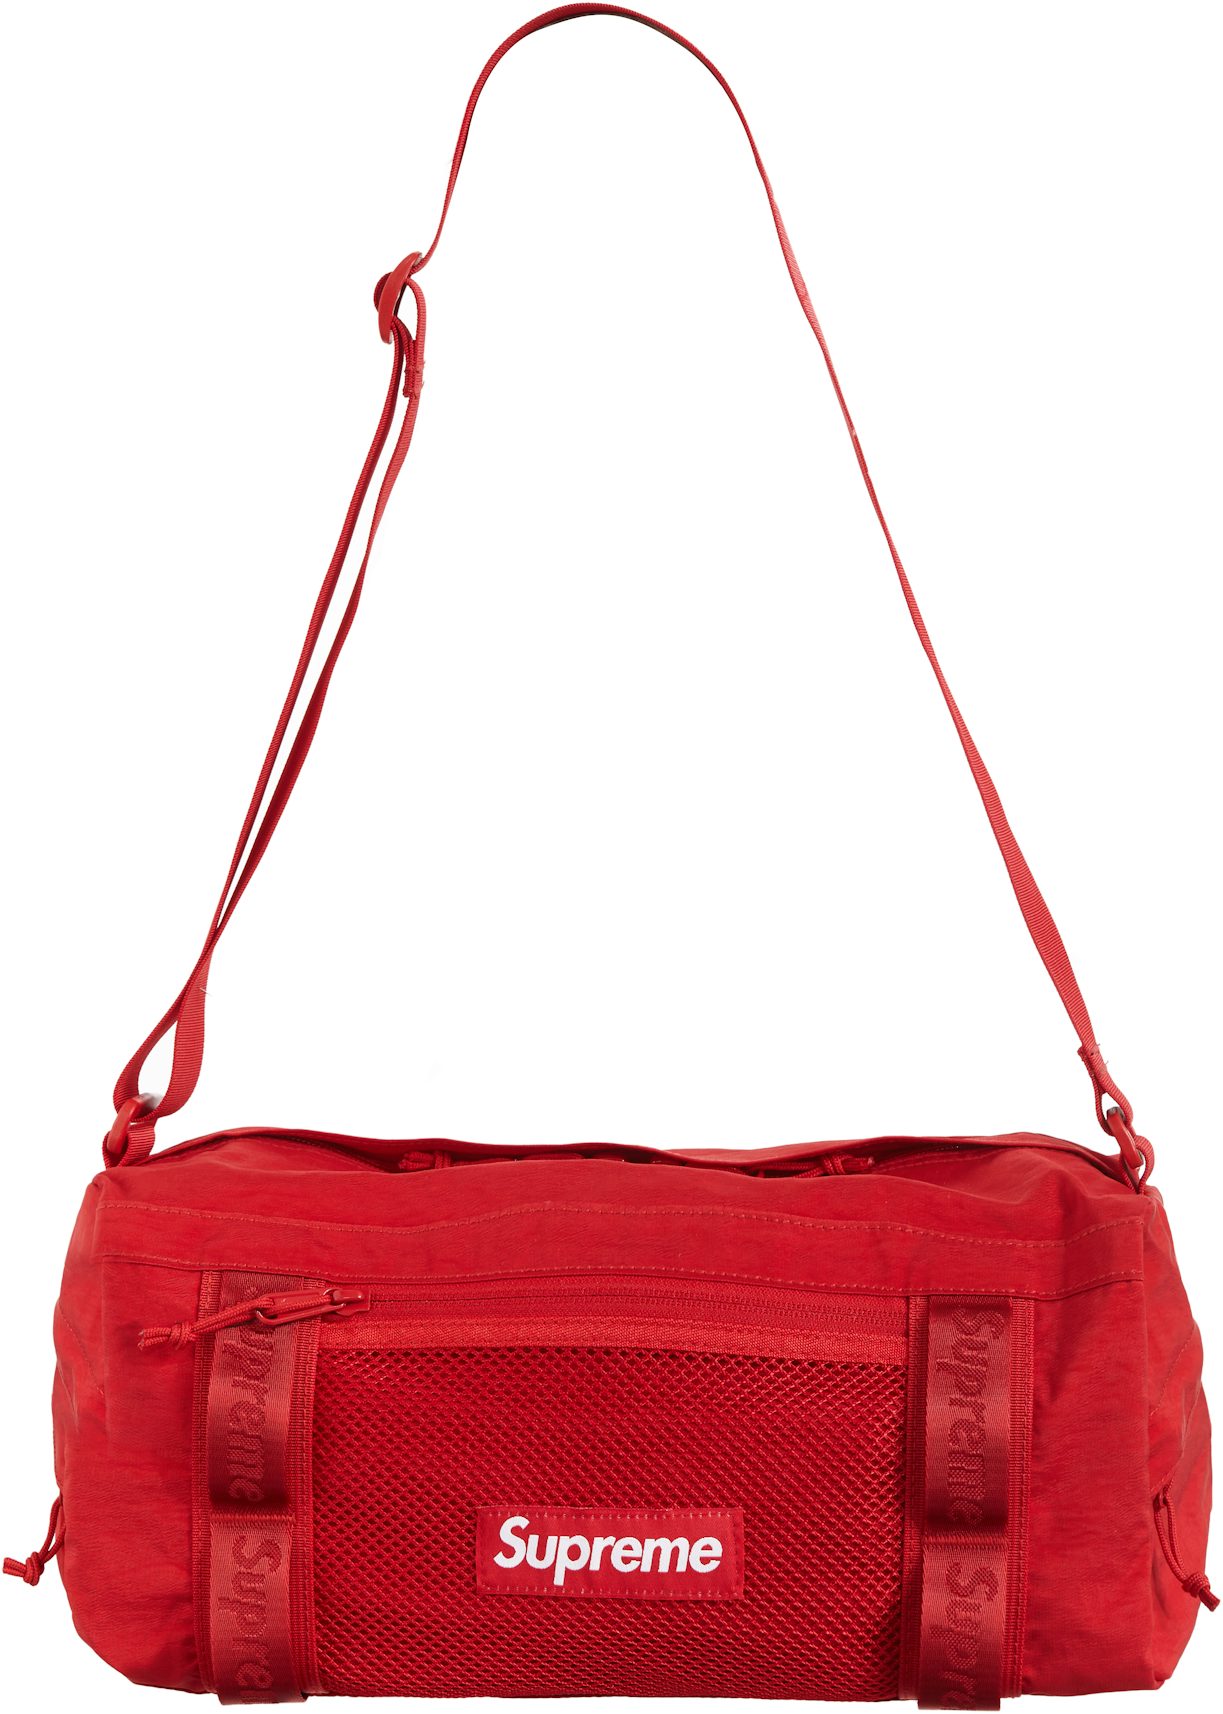 Dino Sources - Supreme Mini Duffle Bag Color: Red Size